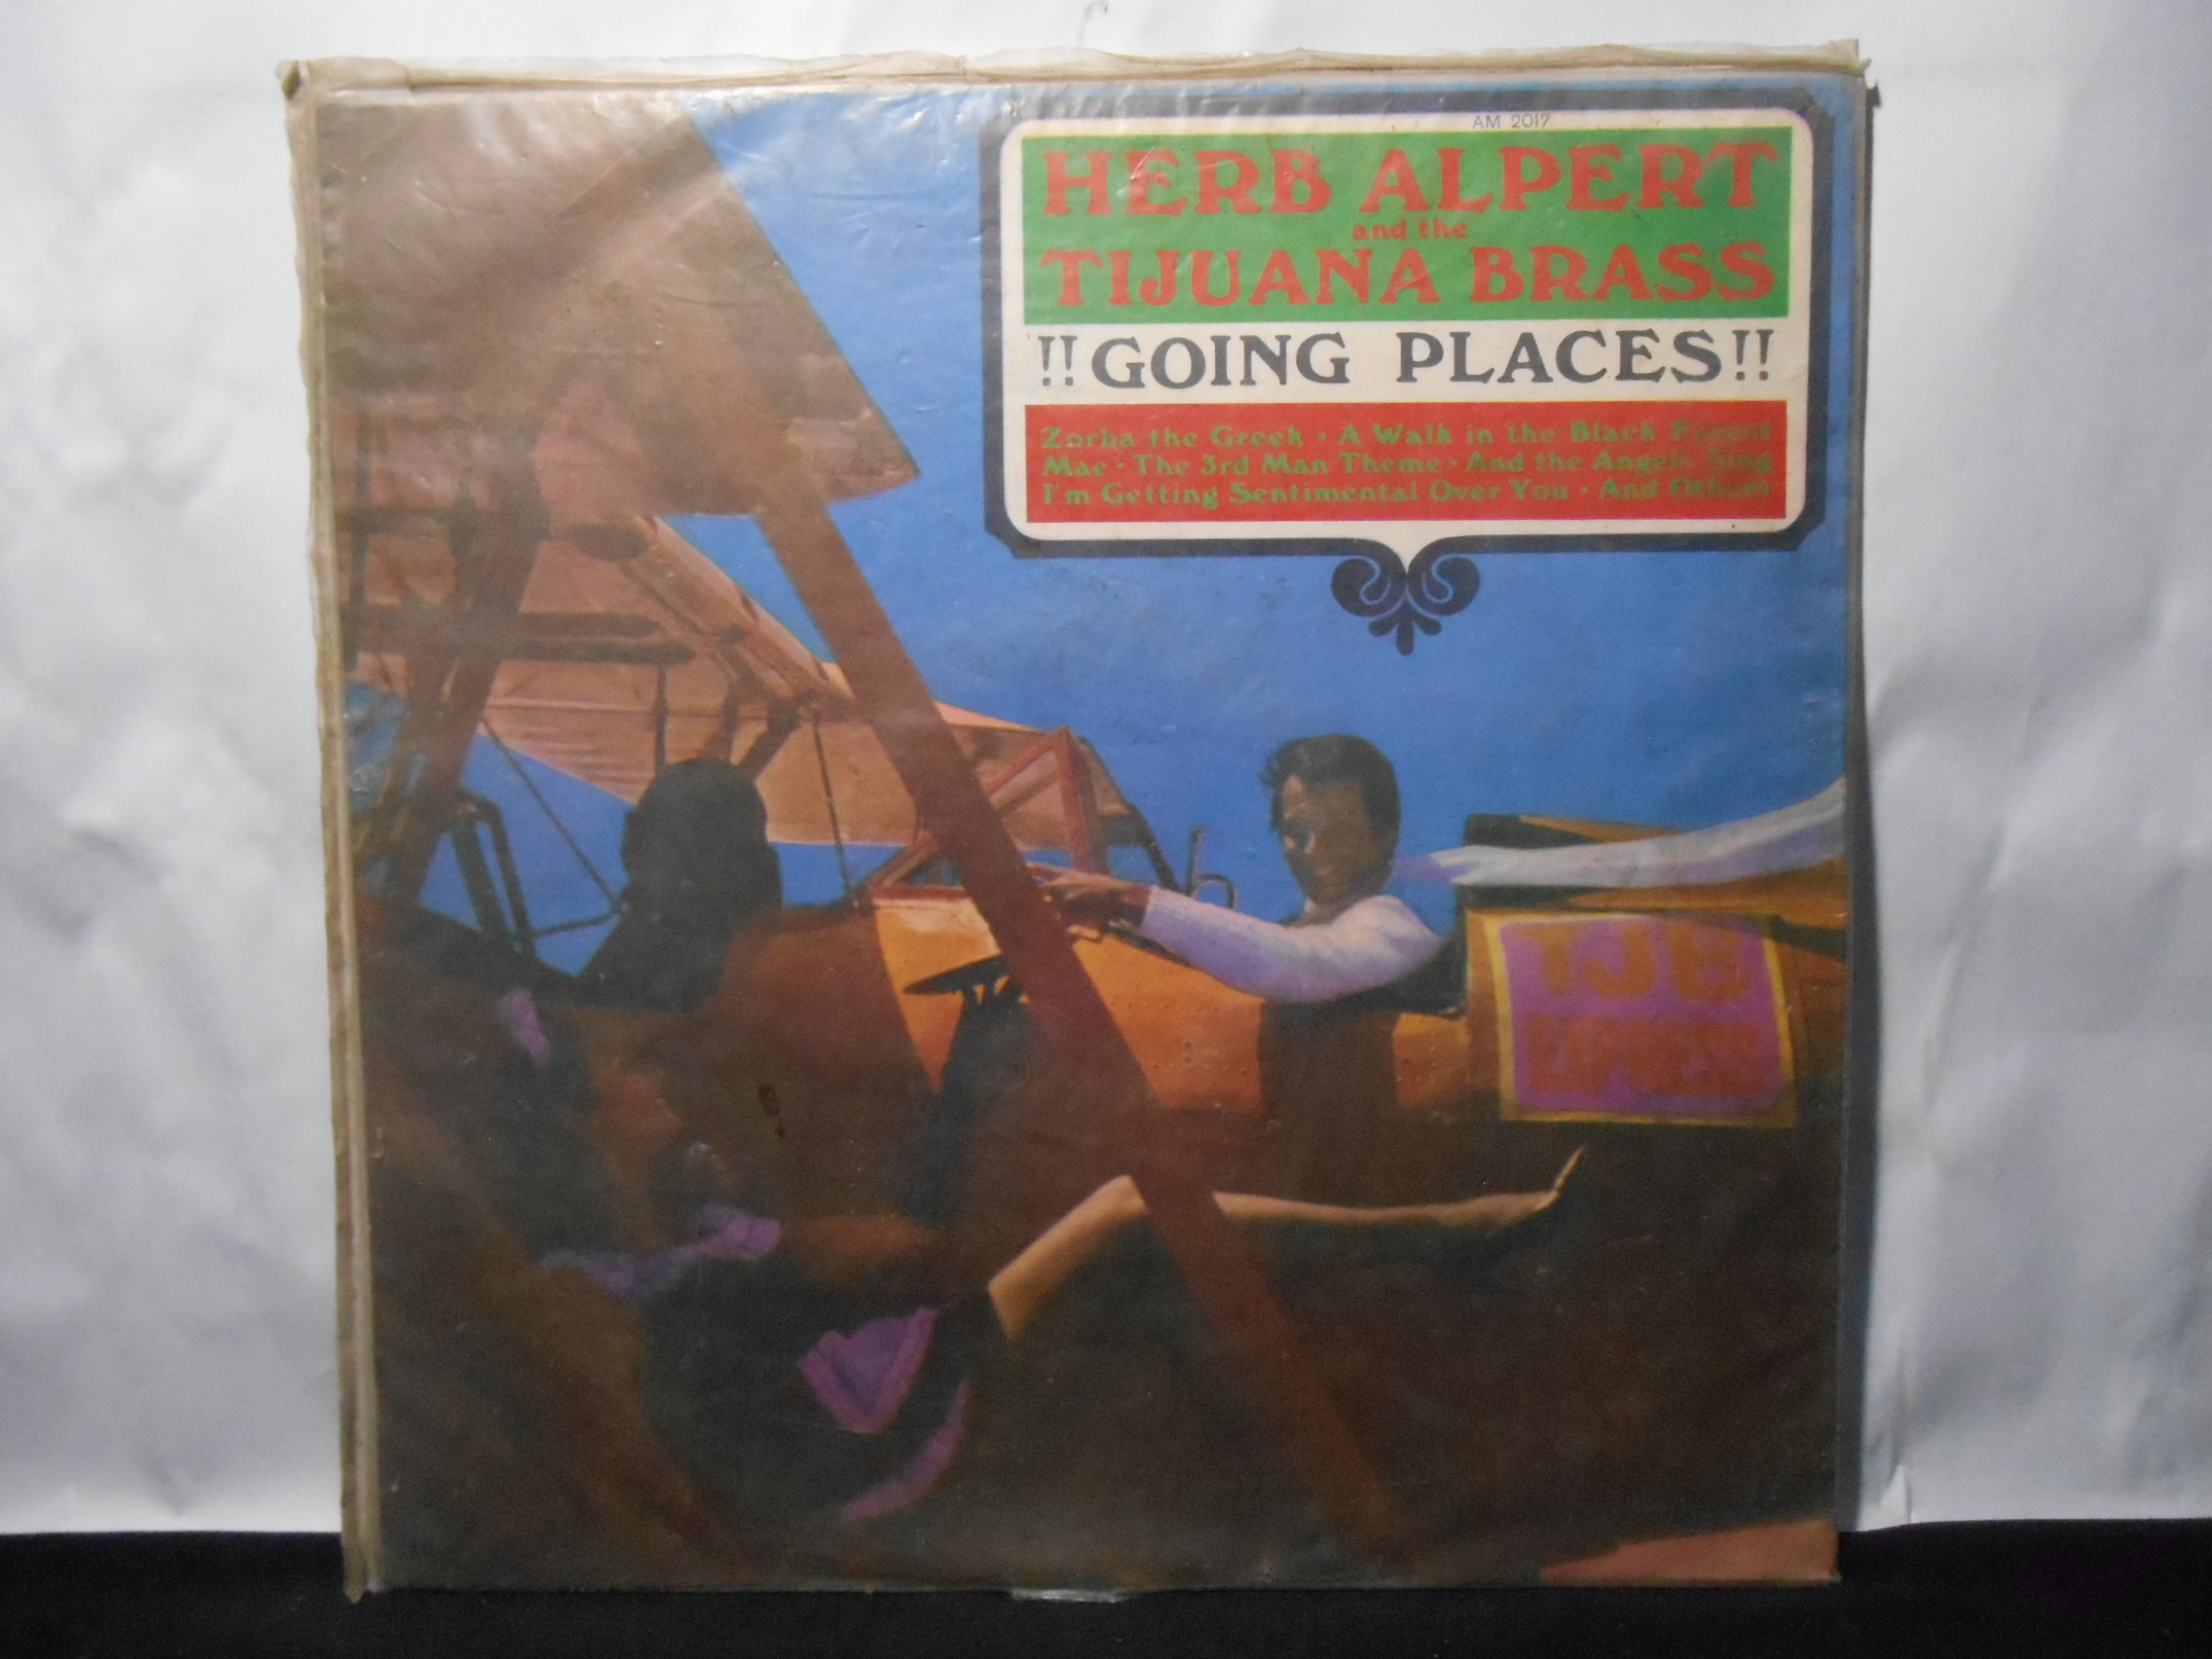 Vinil - Herb Alpert and the Tijuana Brass - Going Places